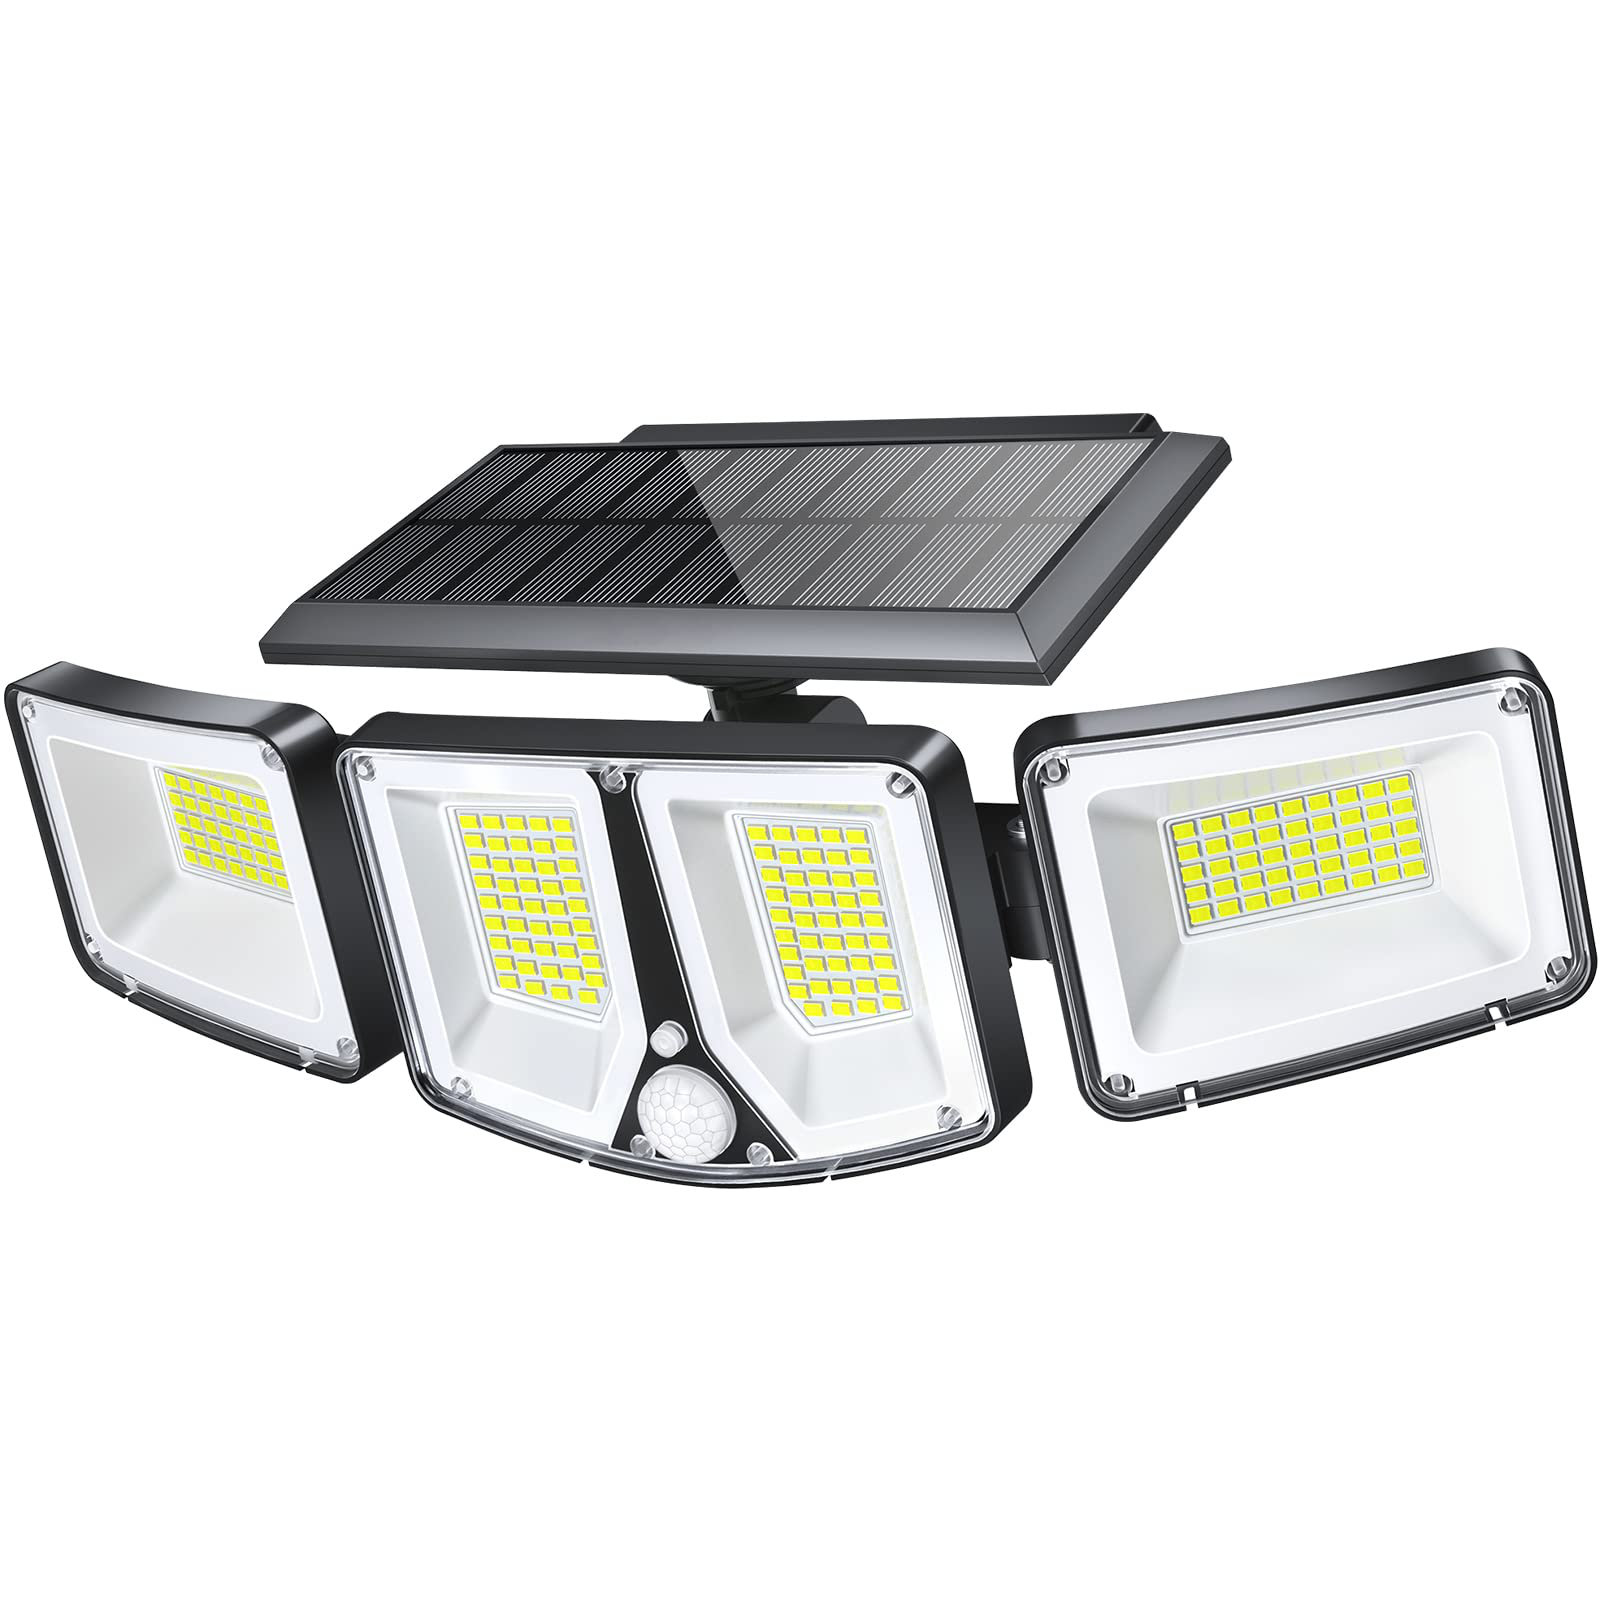 104 LED Solar Power Motion Sensor Light Garden Security Outdoor Floodlight USA 